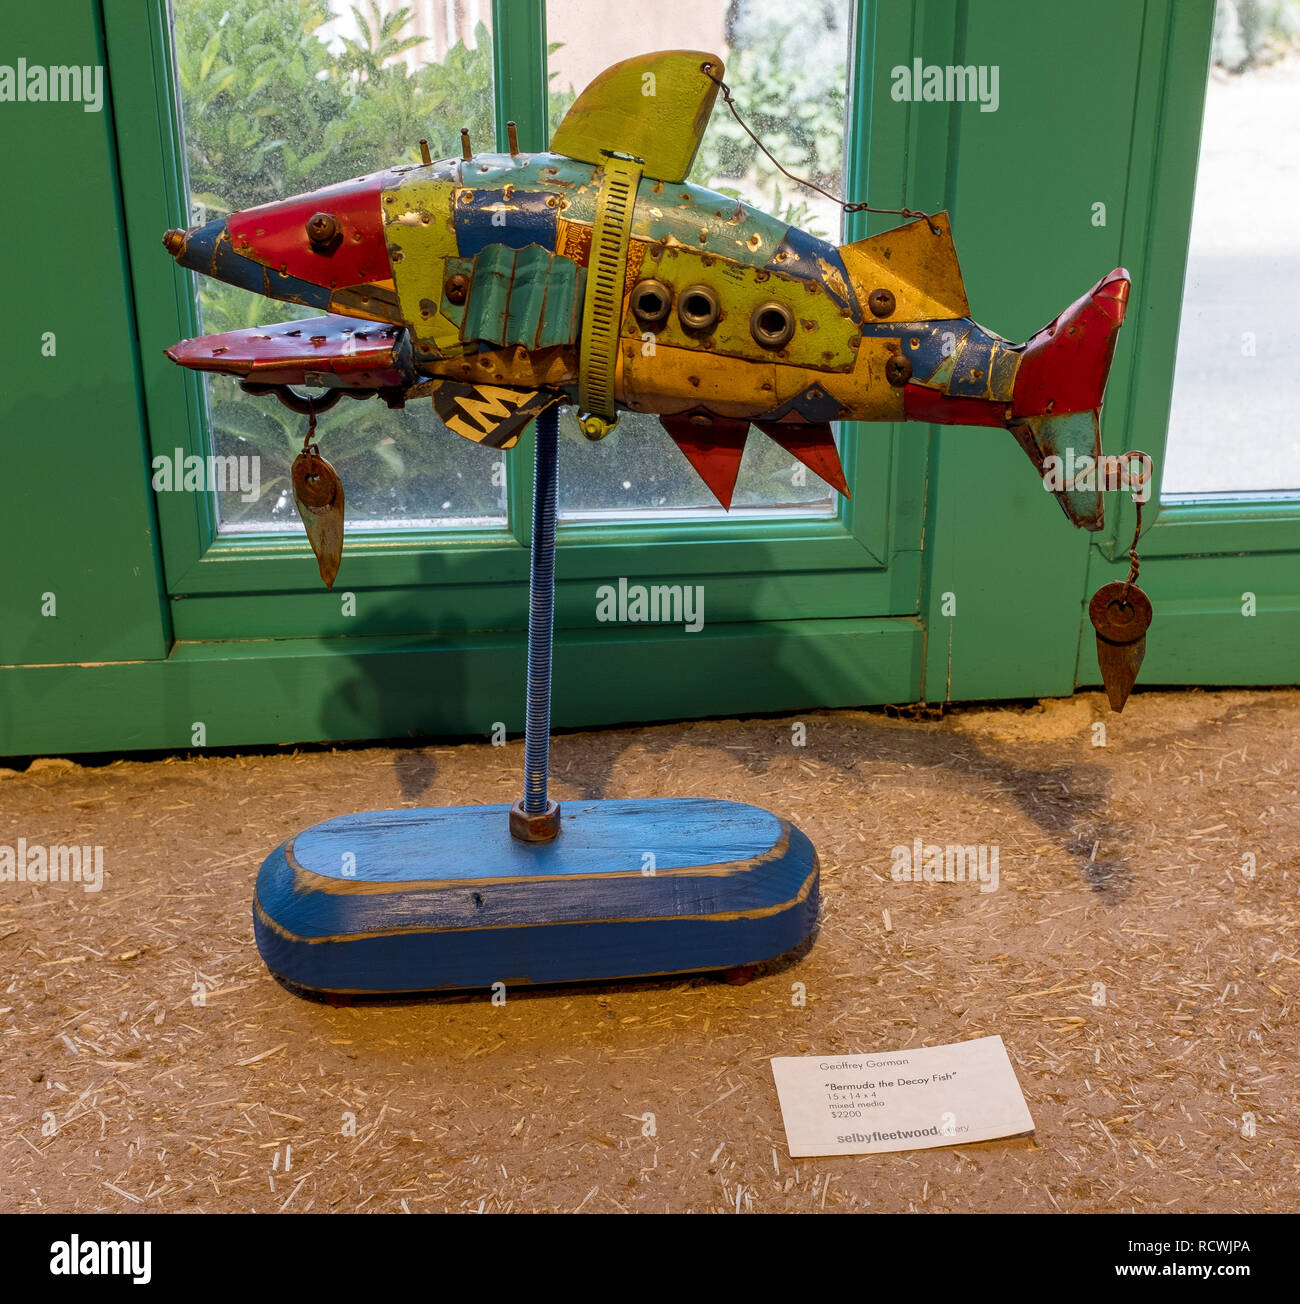 Mixed media scultore Geoffrey Gorman: "Bermuda il pesce civetta" Foto Stock